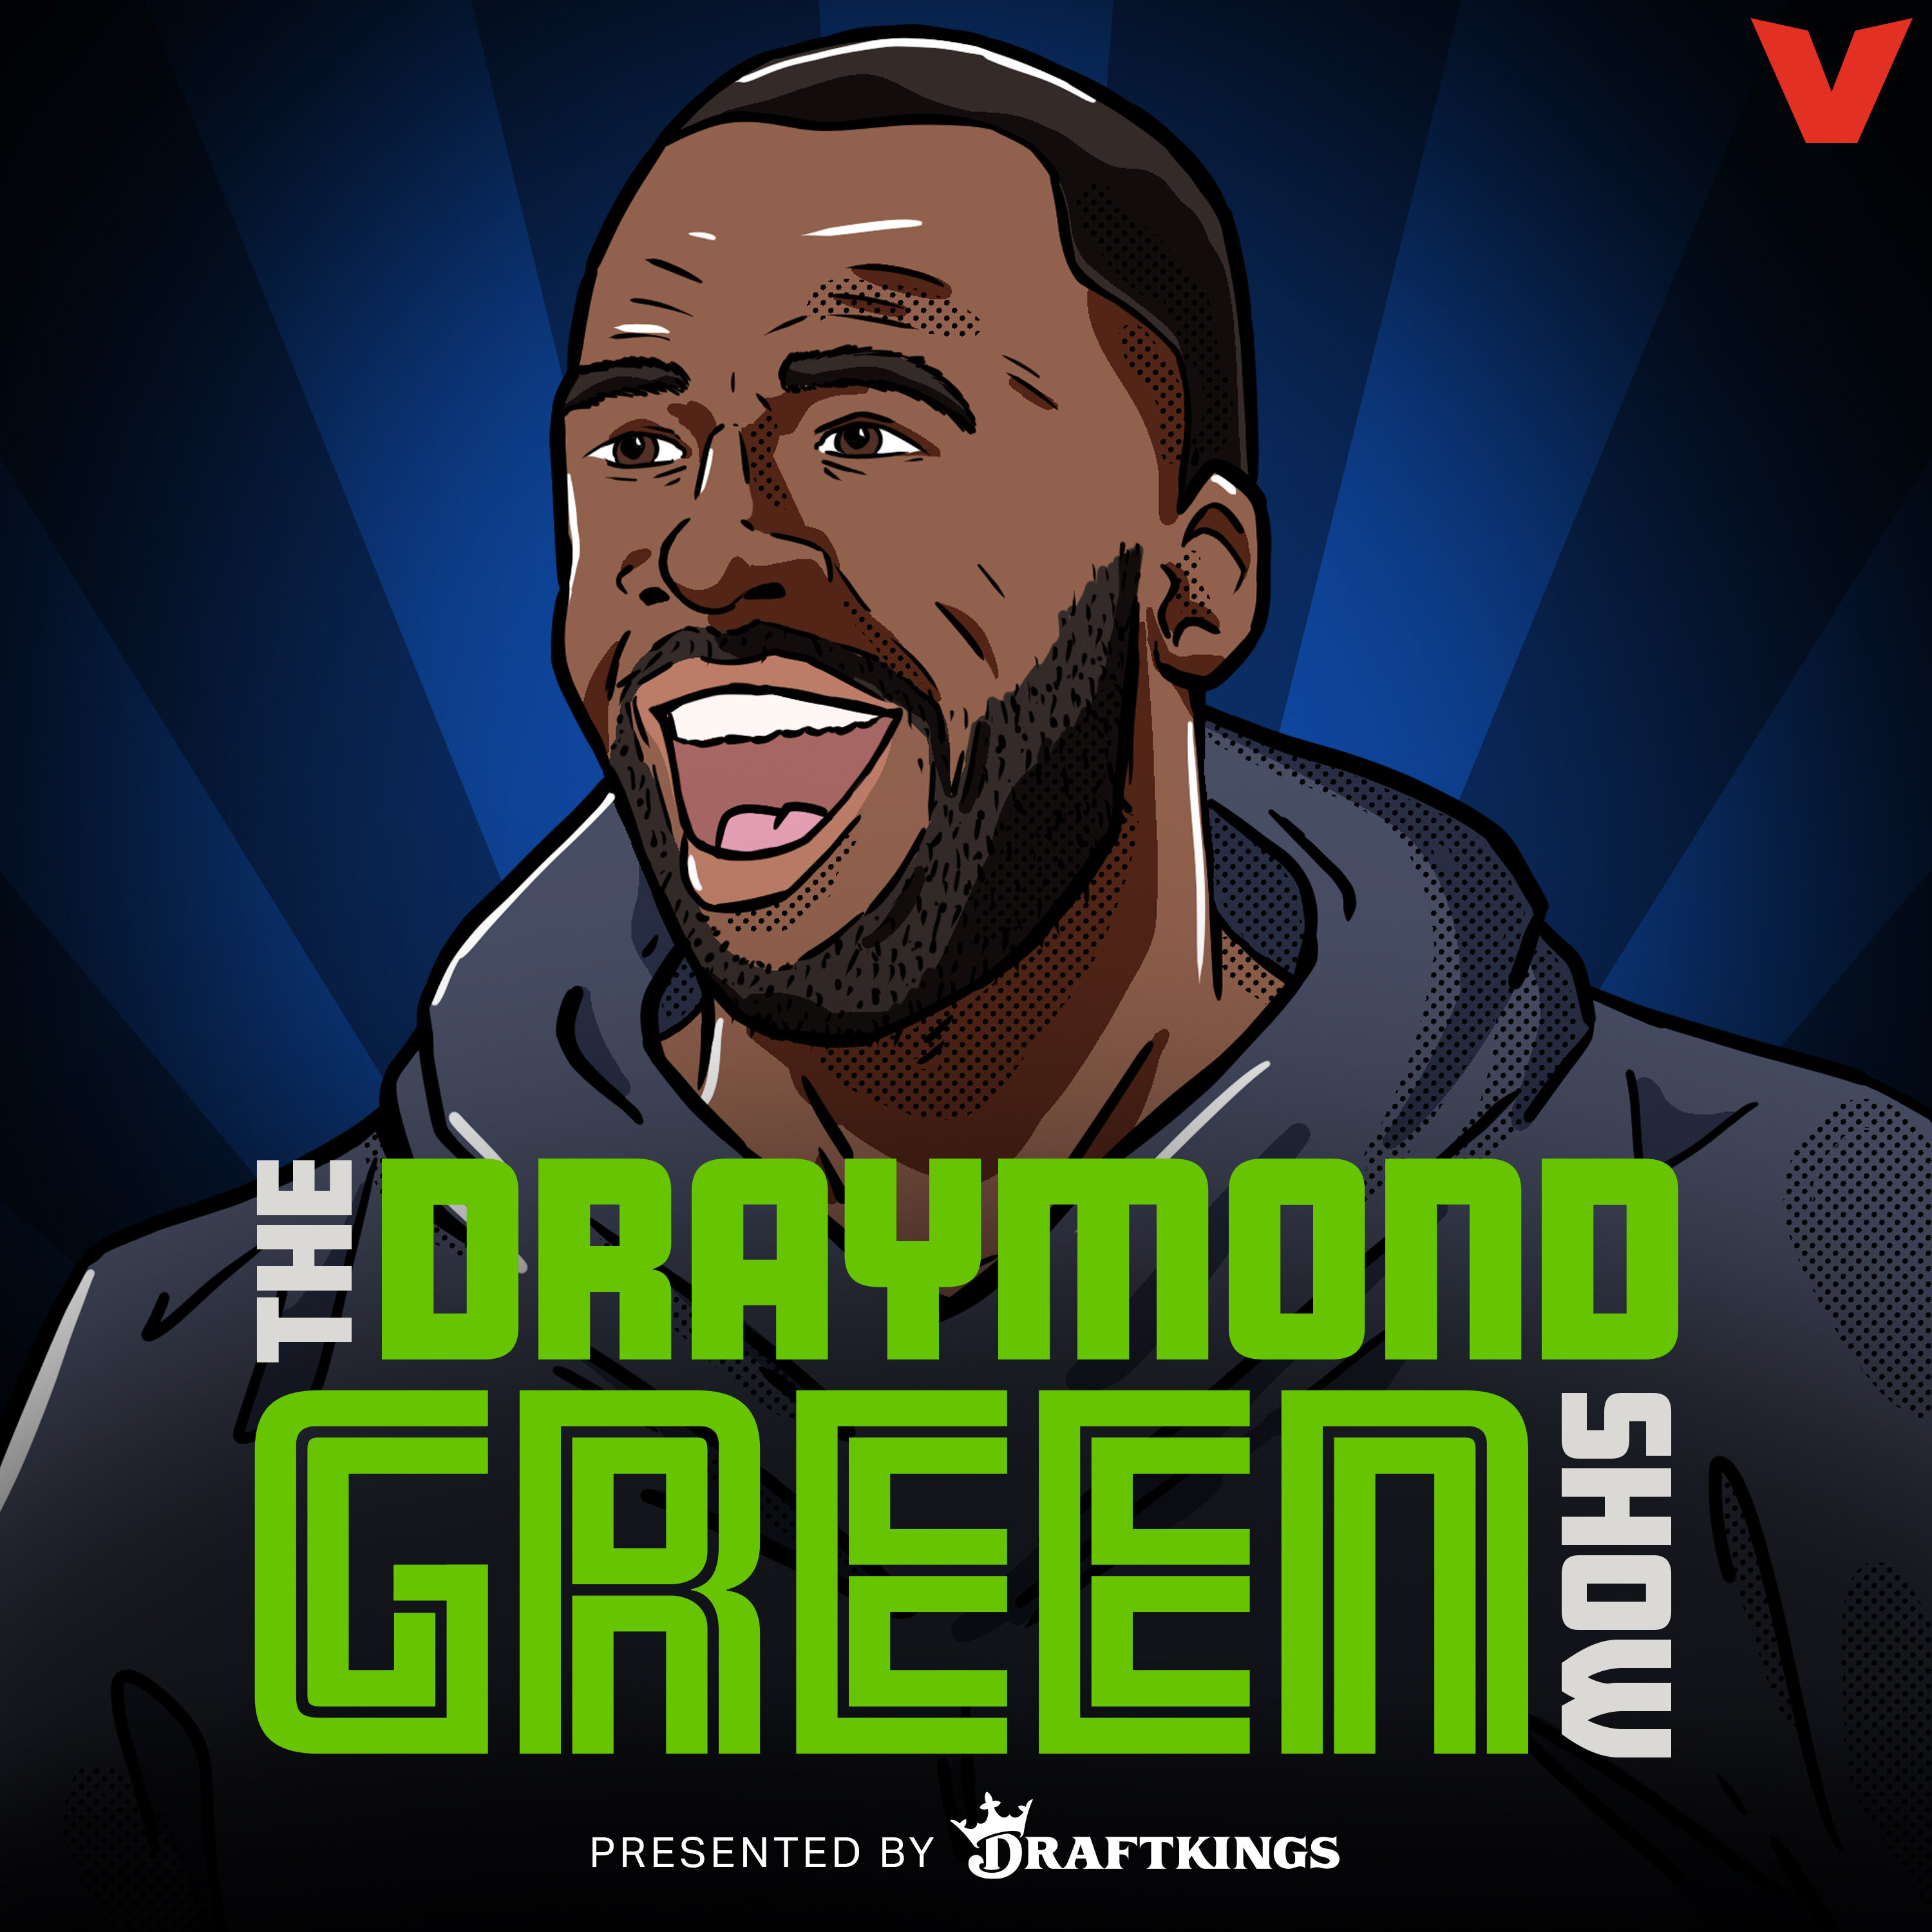 Draymond Green Show - Warriors Season Over, What’s Next?